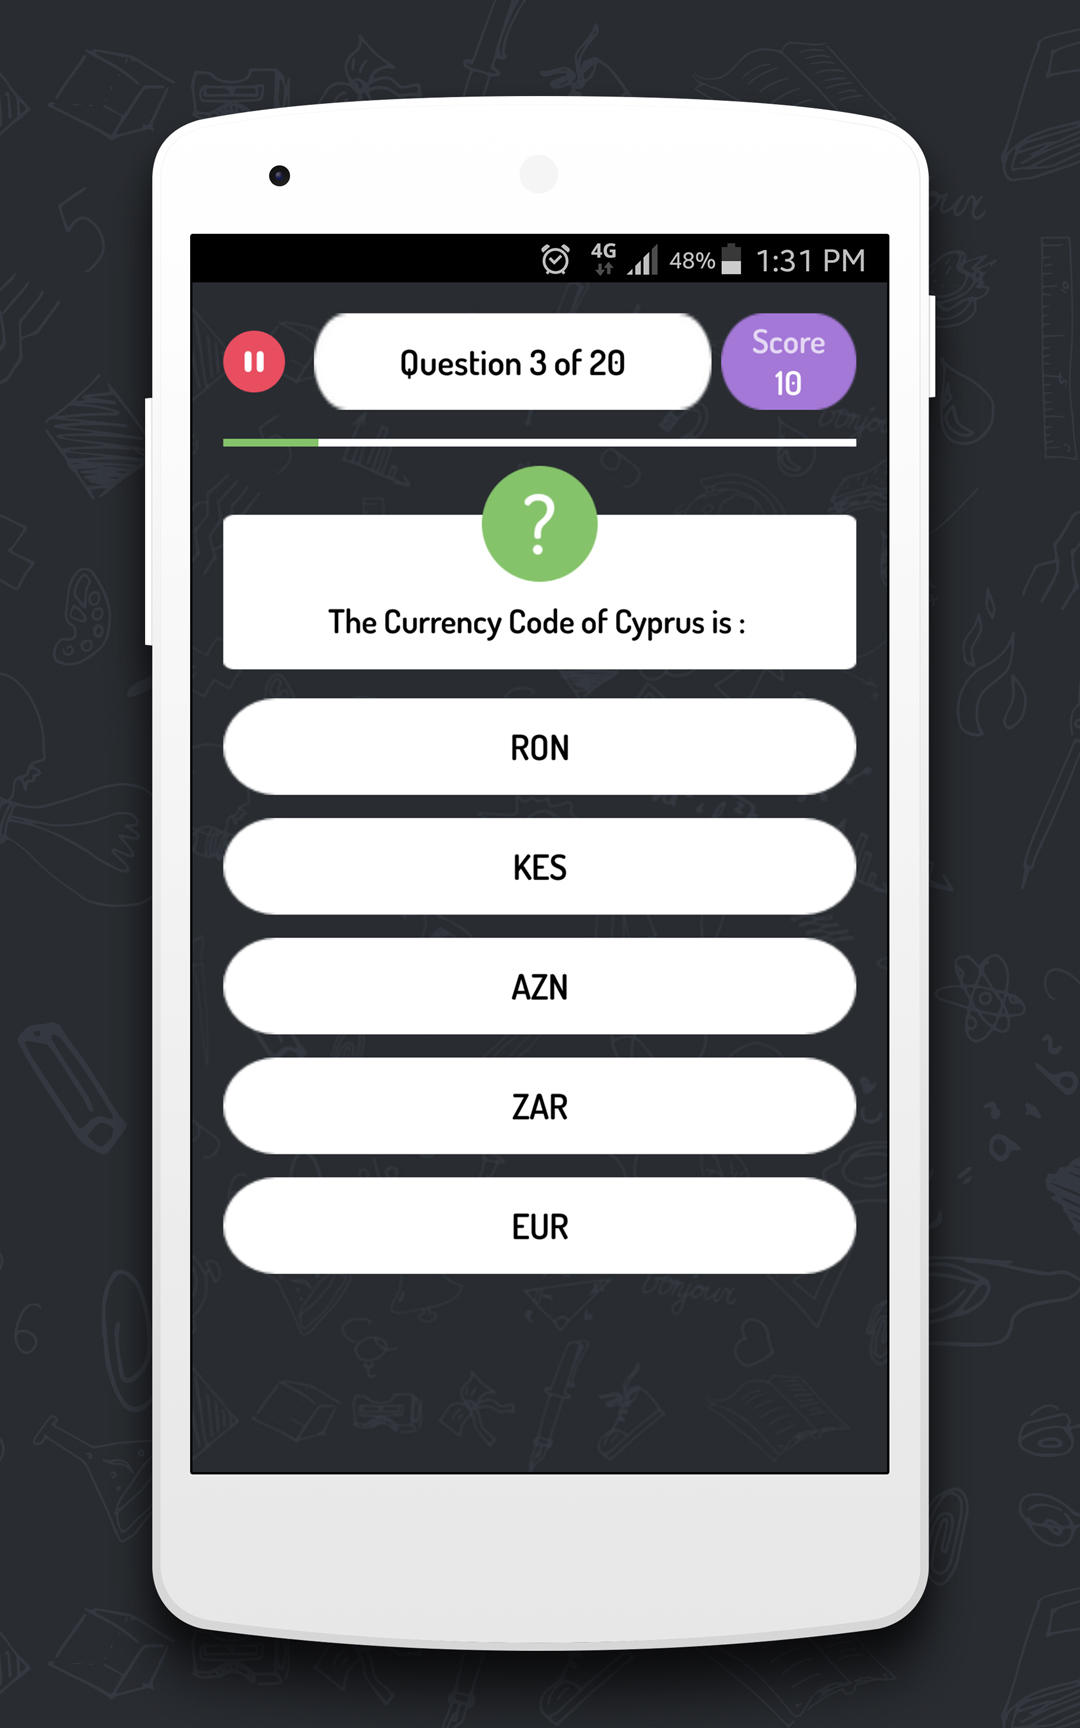 Screenshot of World Quiz